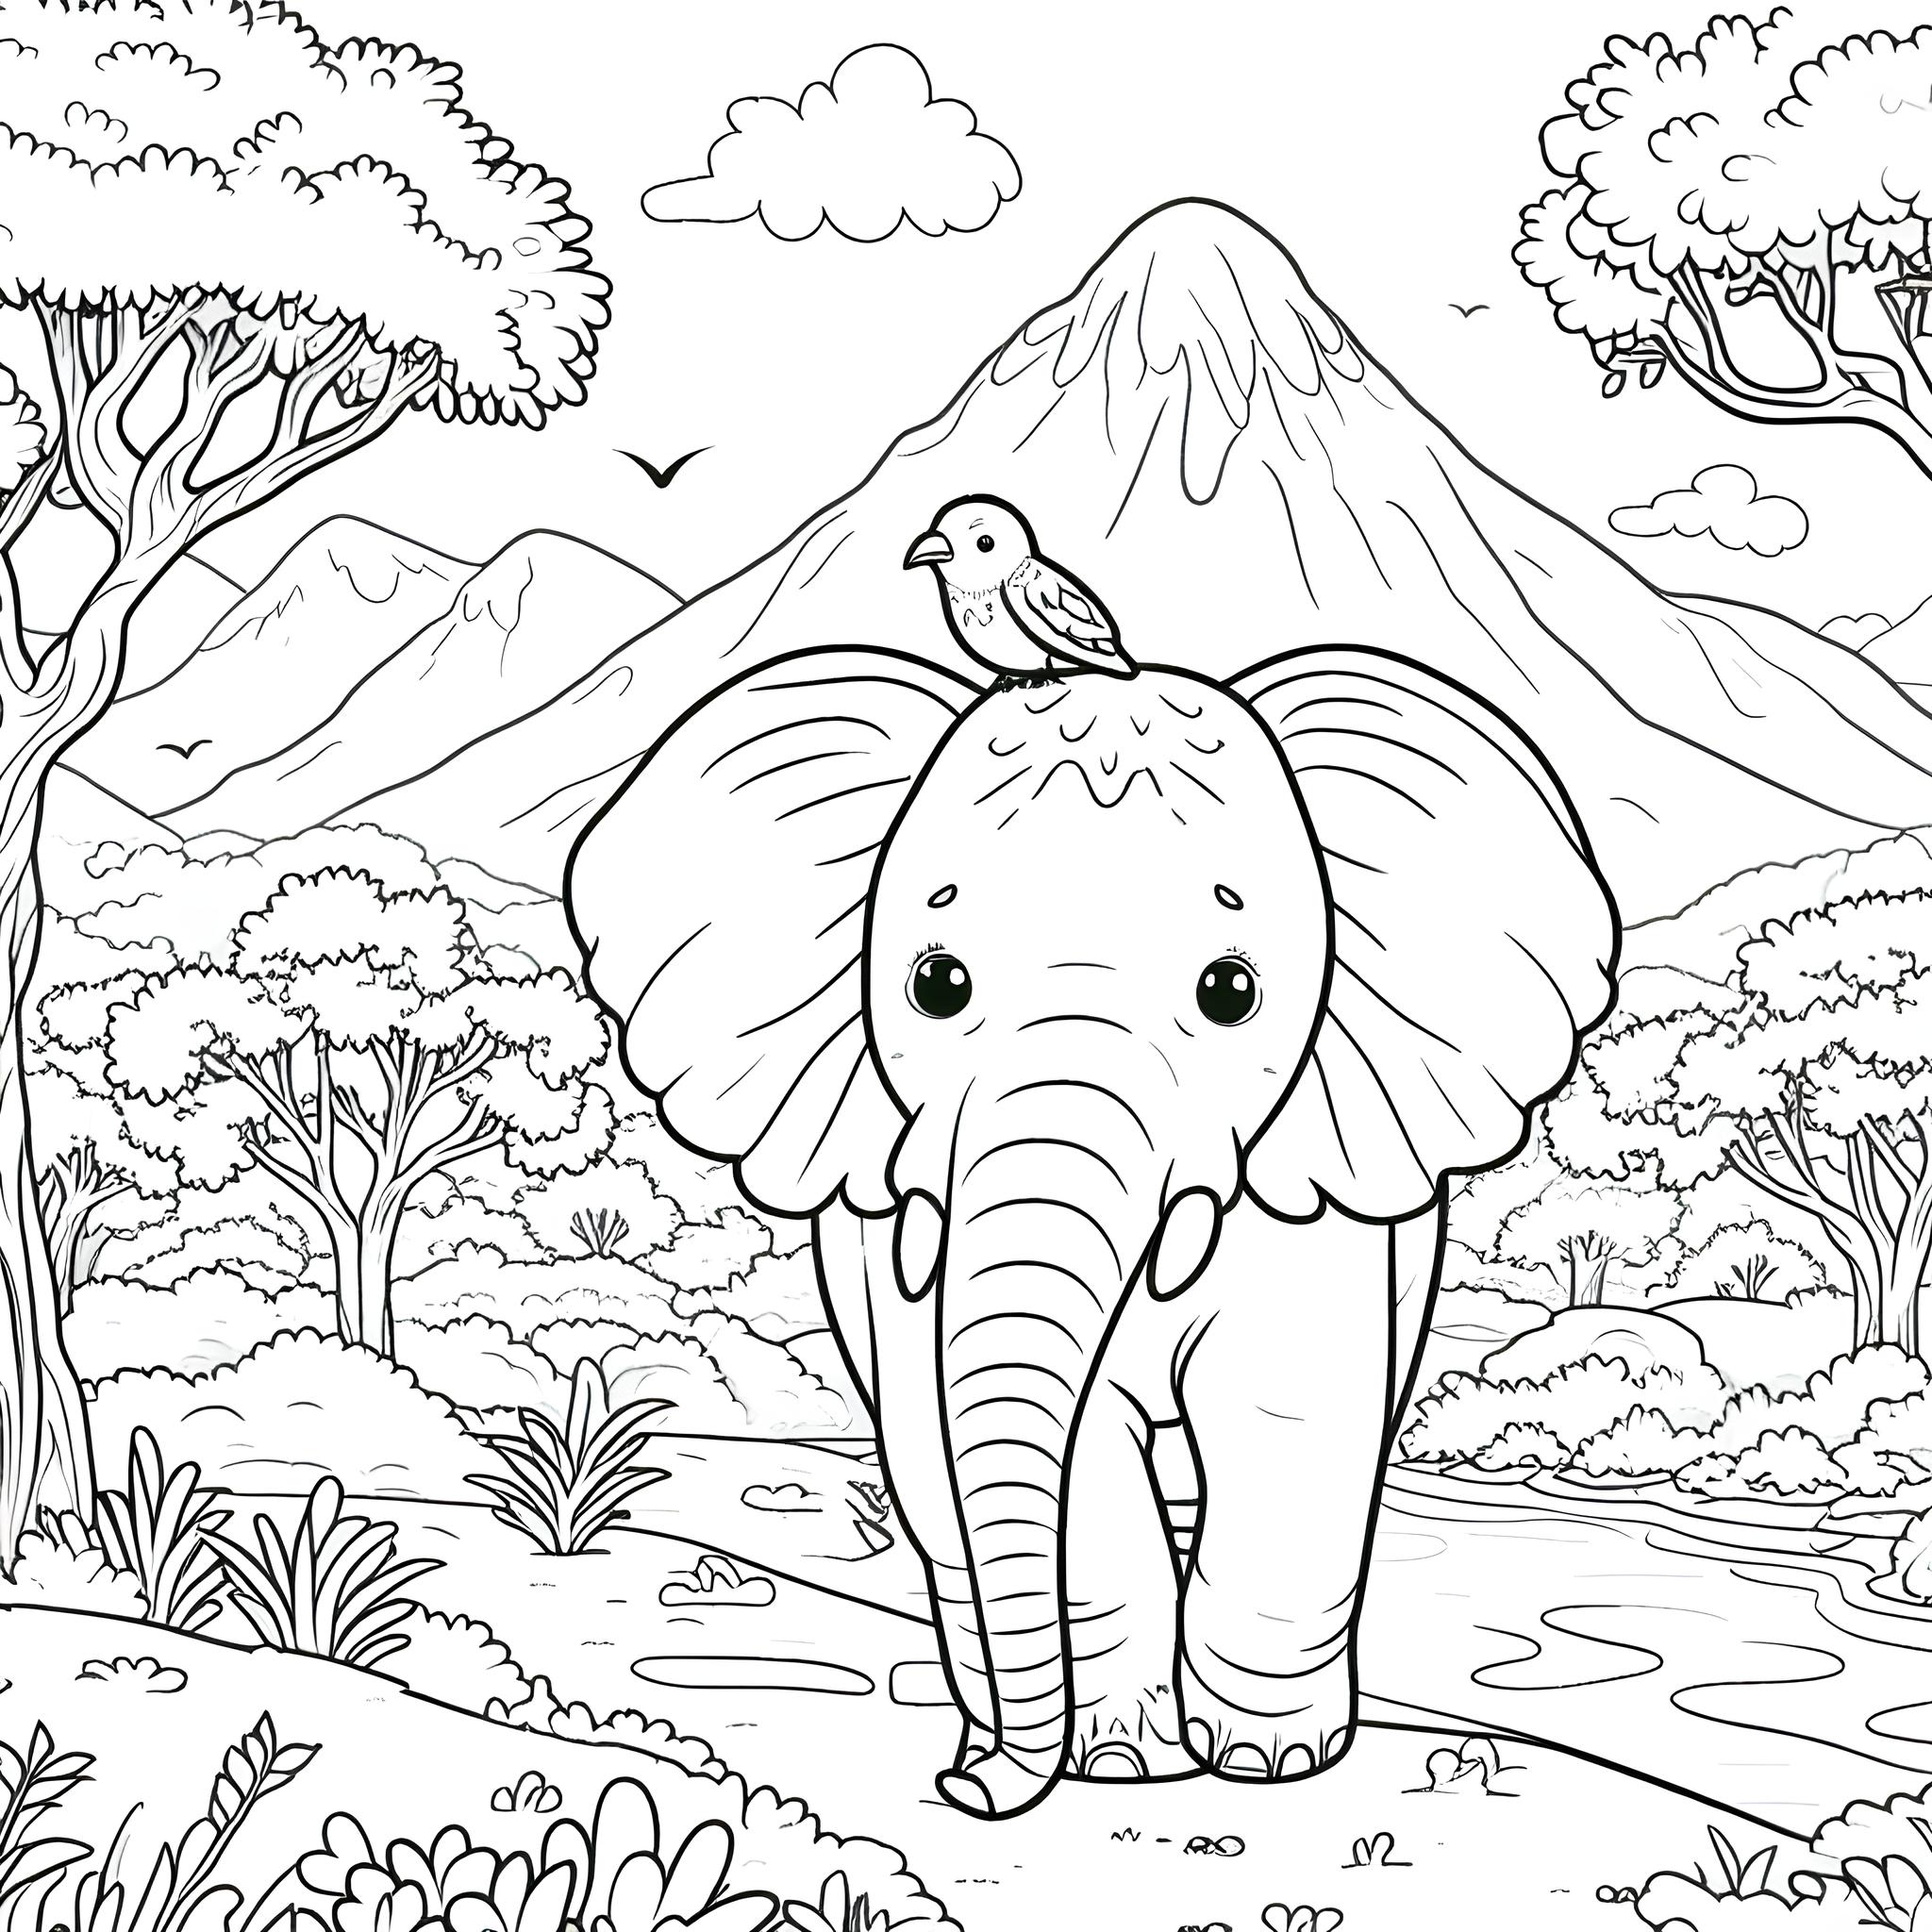 Ausmalbild: Junger Elefant